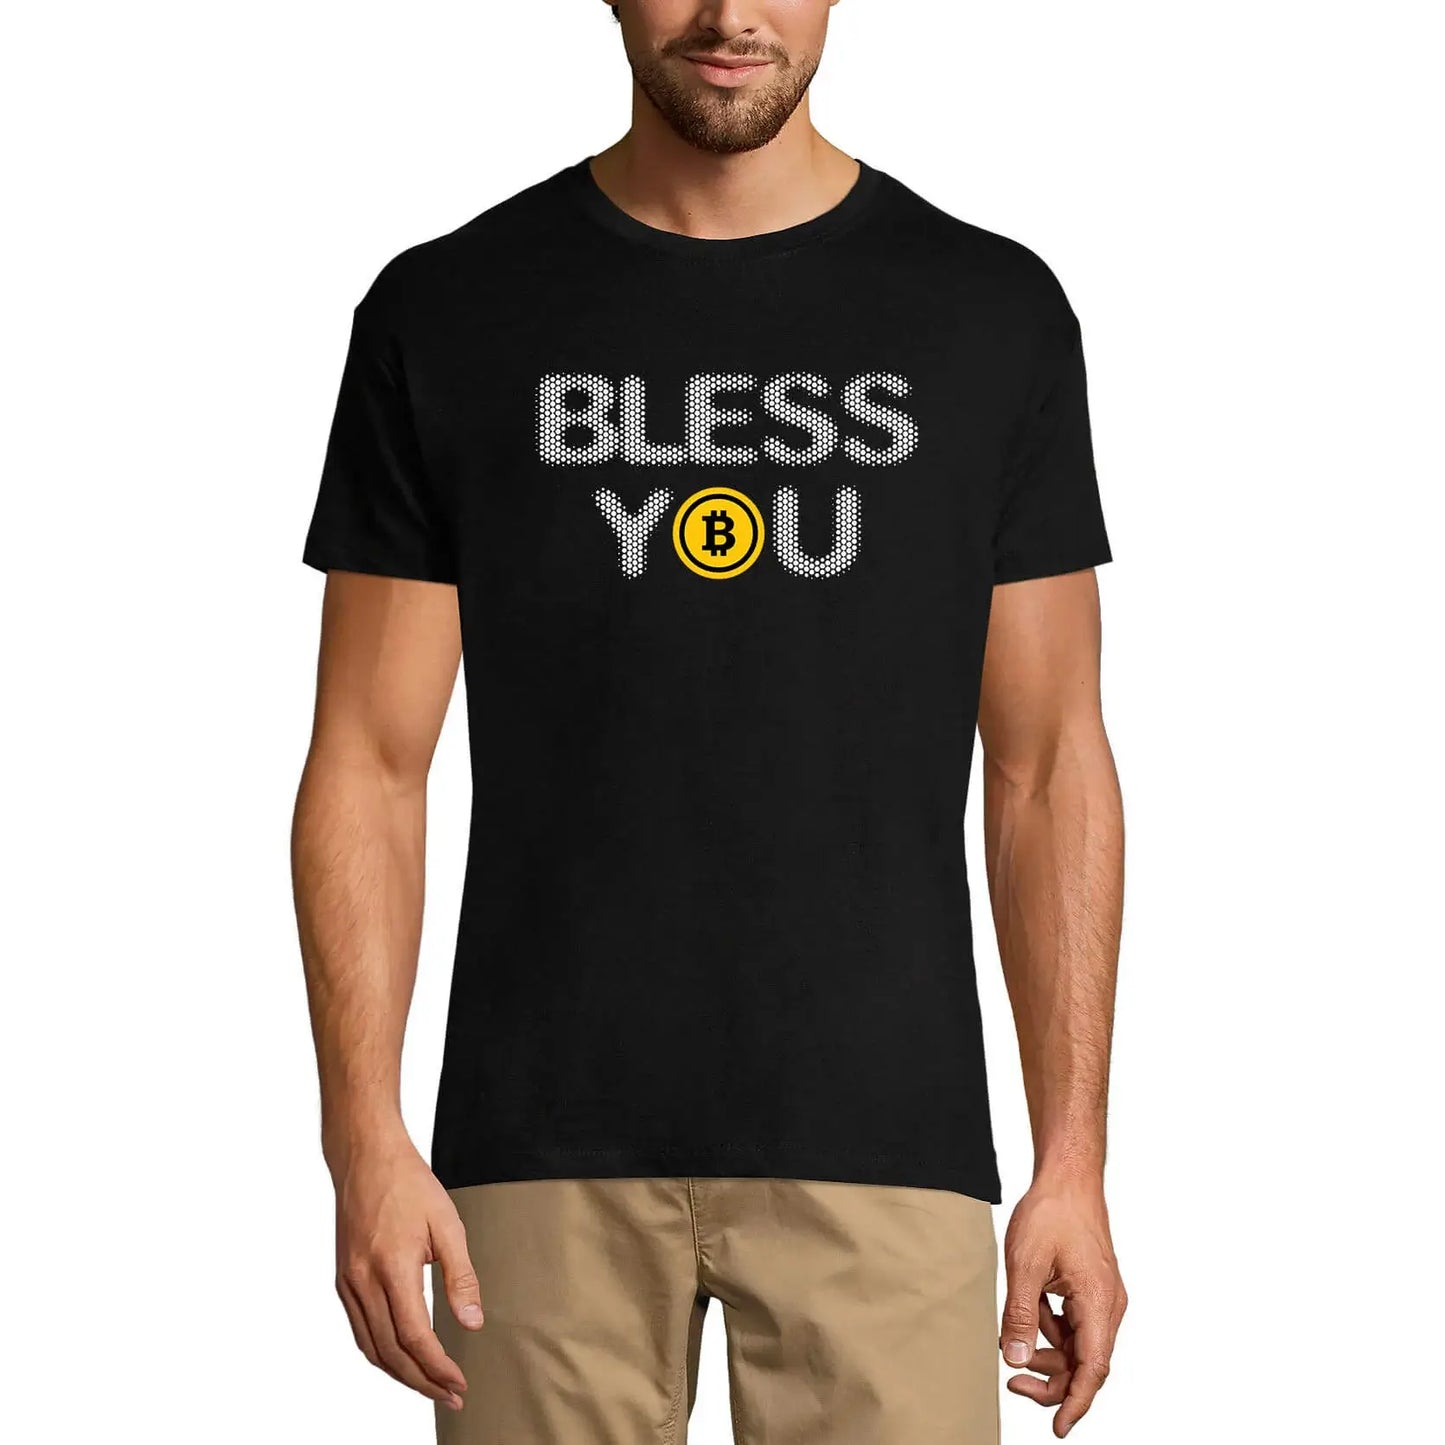 Men's Graphic T-Shirt Bitcoin Bless You - Btc Hodl Shirt - Crypto Idea Eco-Friendly Limited Edition Short Sleeve Tee-Shirt Vintage Birthday Gift Novelty